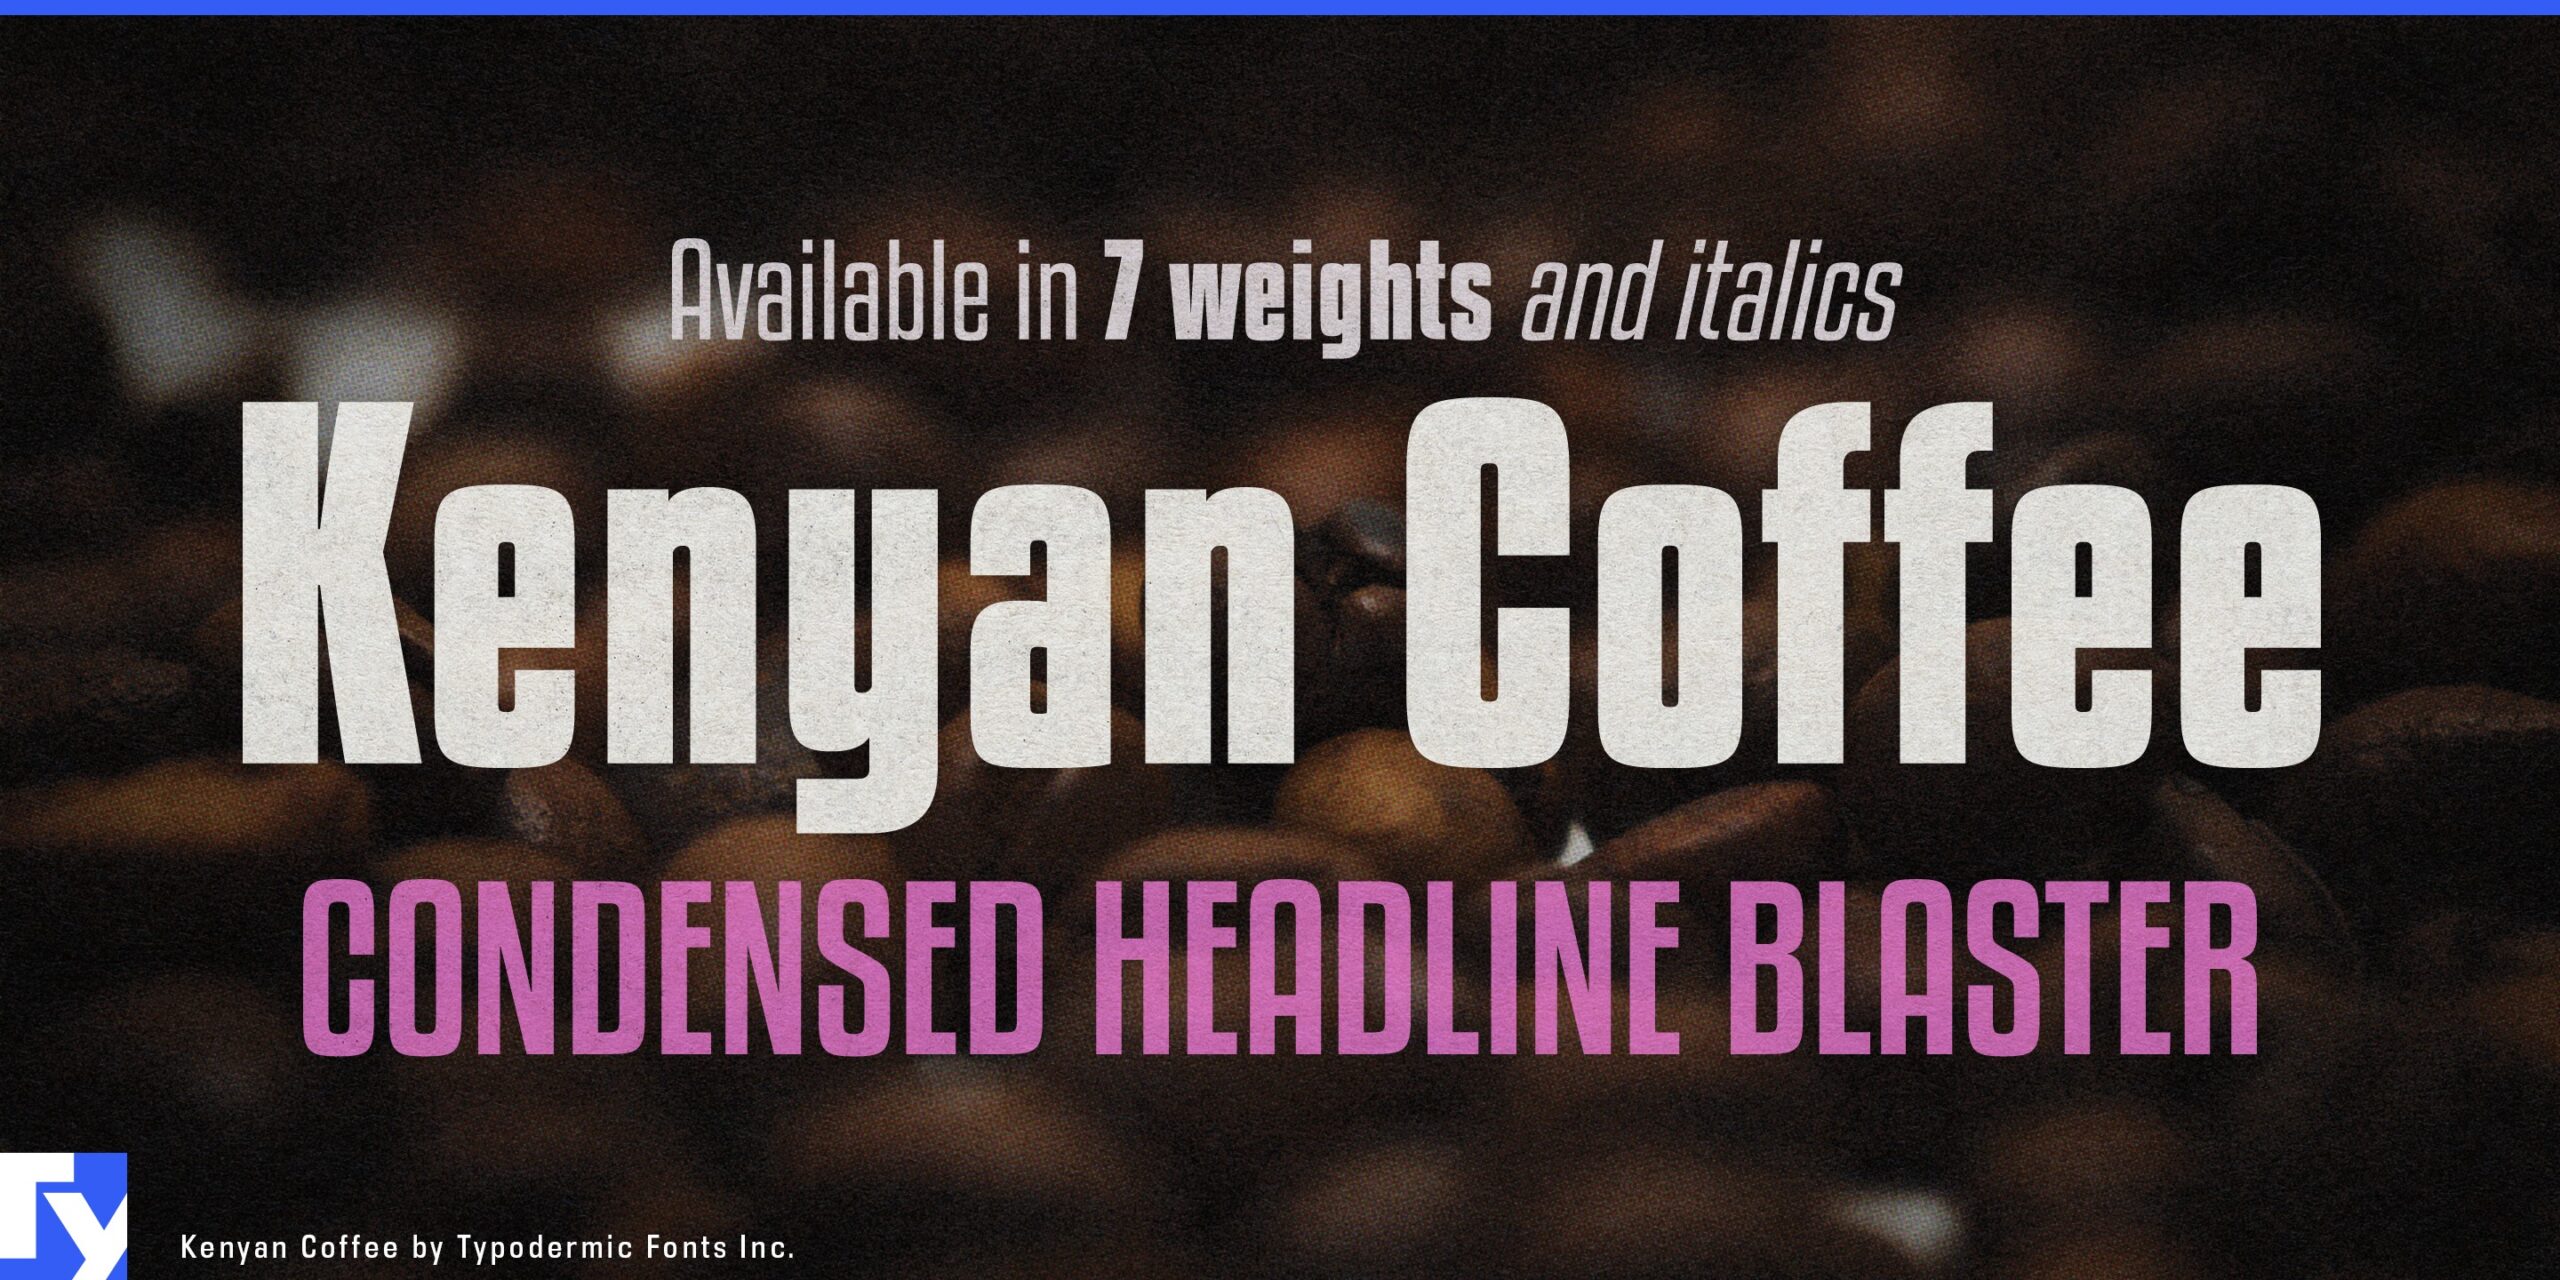 Unleash Your Creativity: Kenyan Coffee Typeface Unlocks Design Possibilities